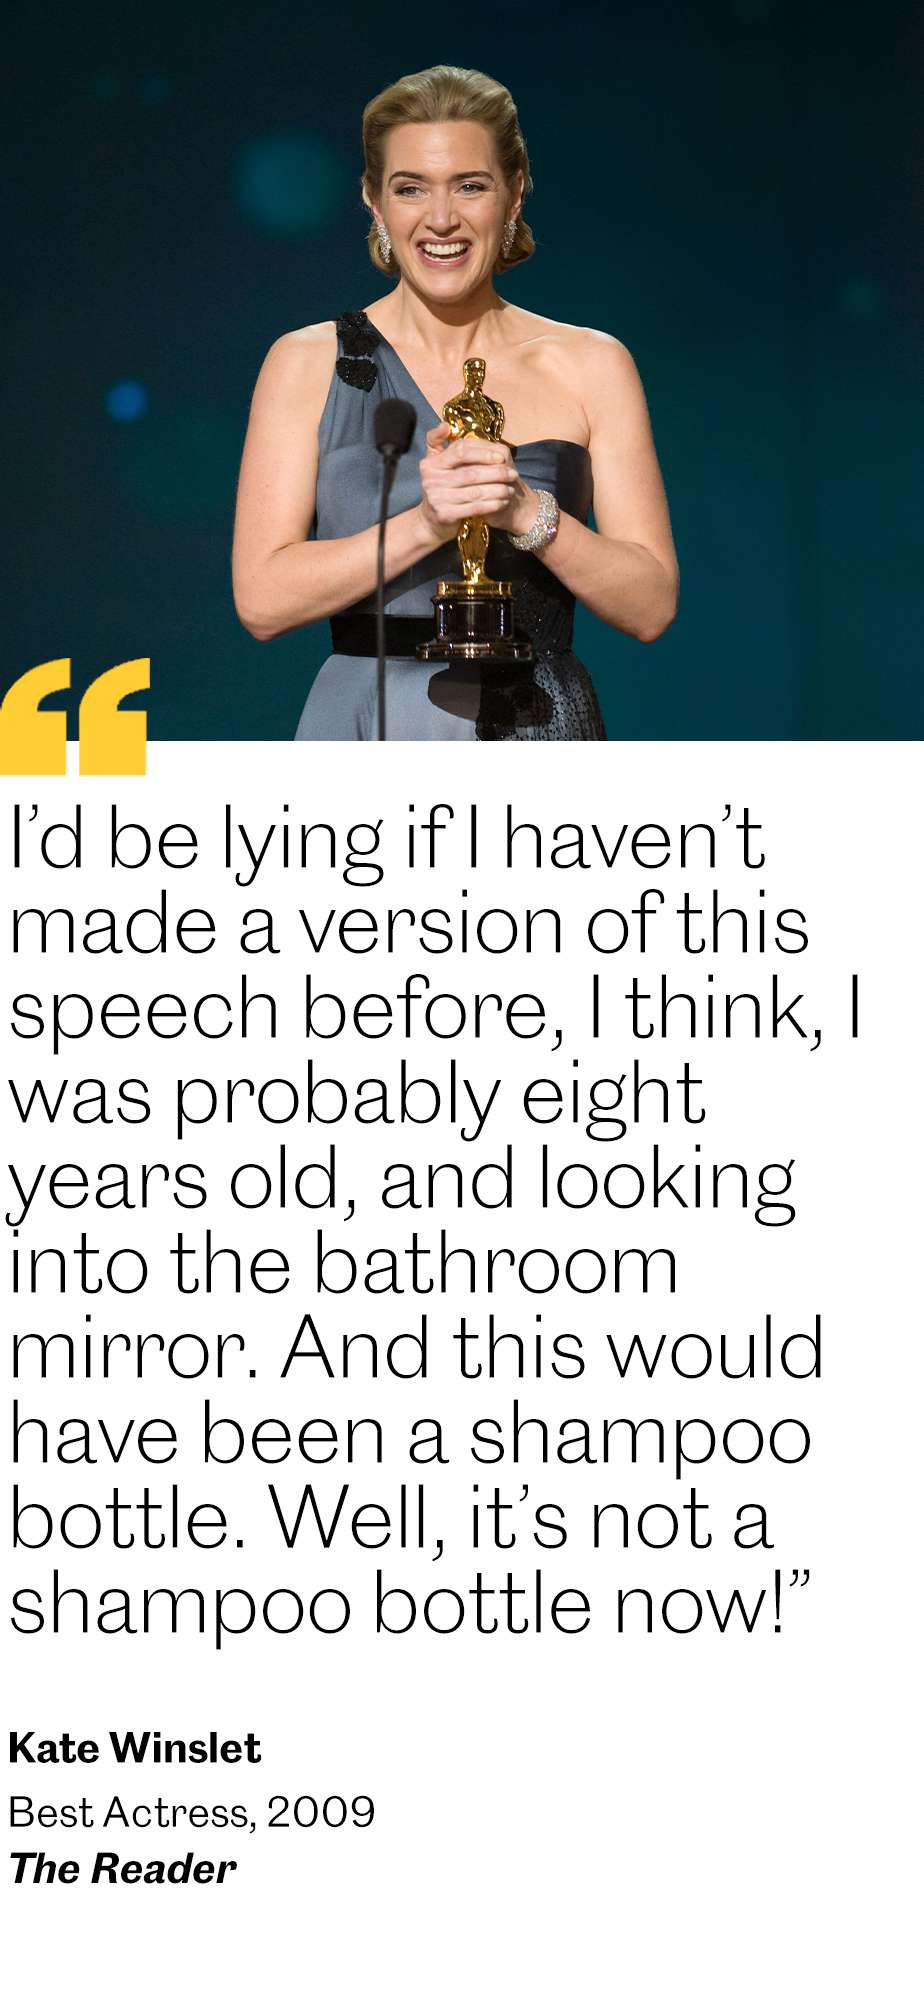 Kate Winslet Oscars 2009 Speech